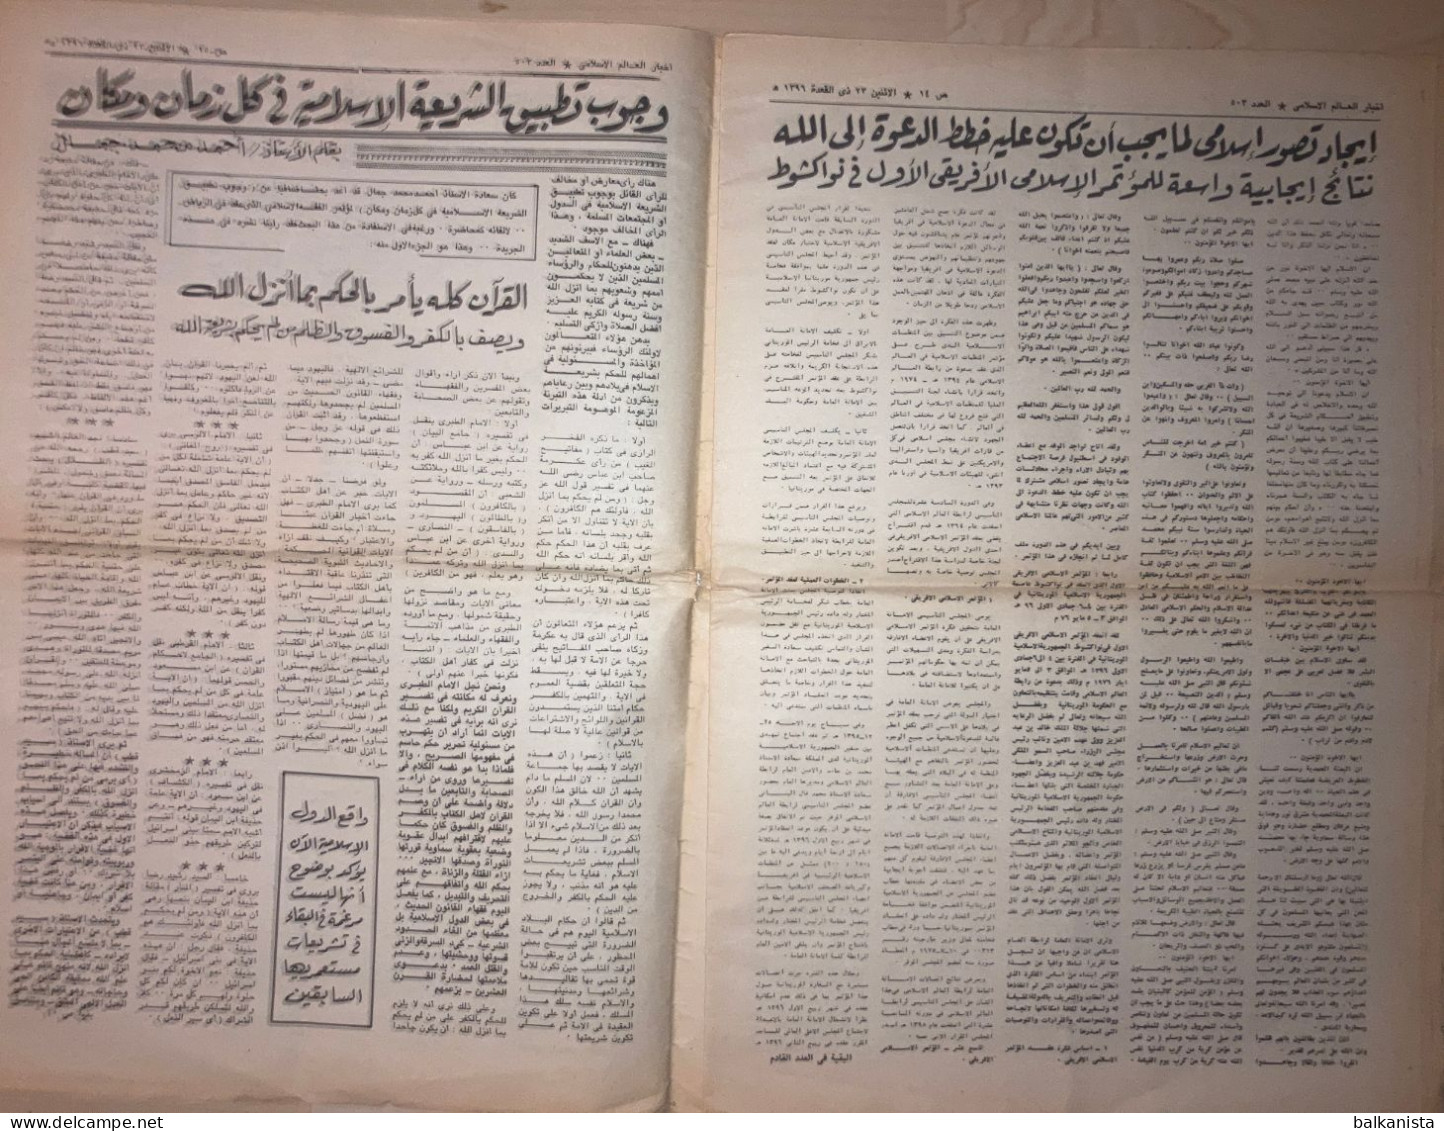 Saudi Arabia Akhbar al-Alam al-Islami Newspaper 15 November 1976